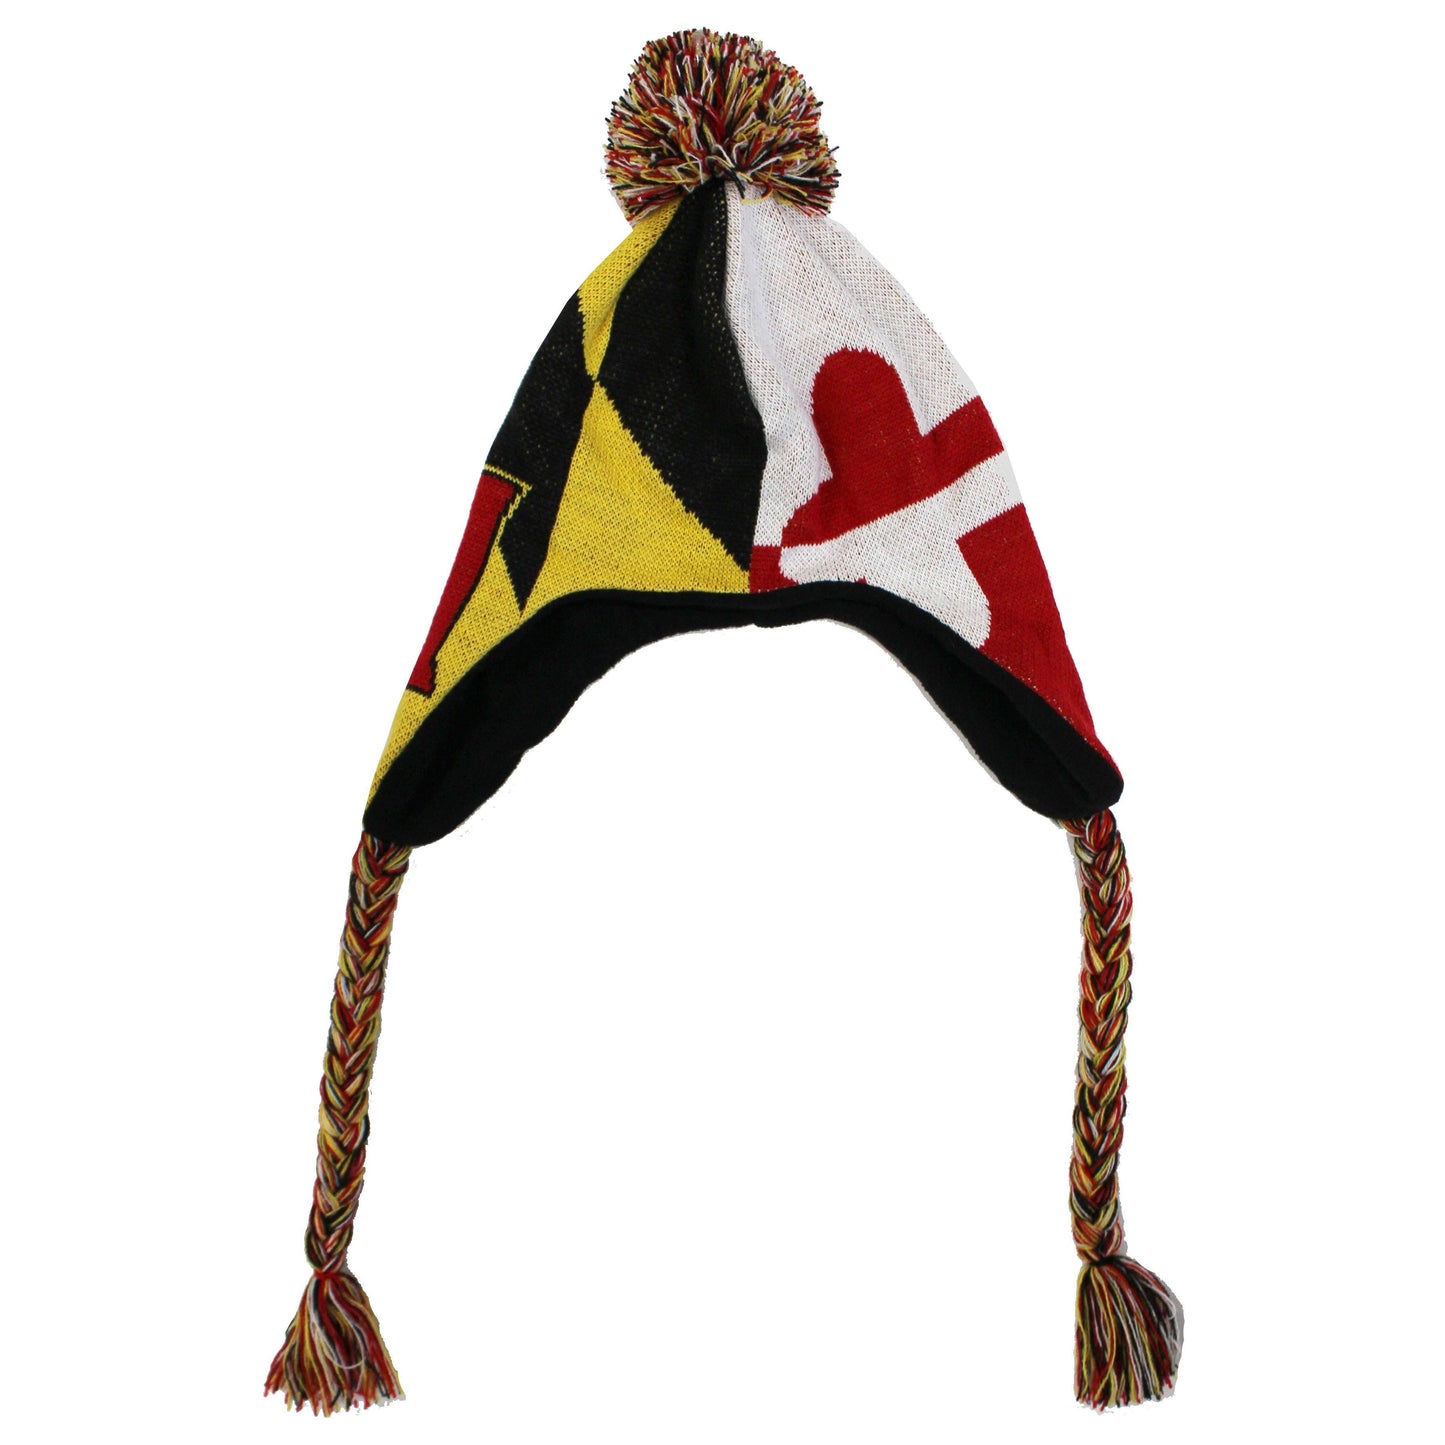 UMD & Maryland Flag / Ski Hat - Route One Apparel